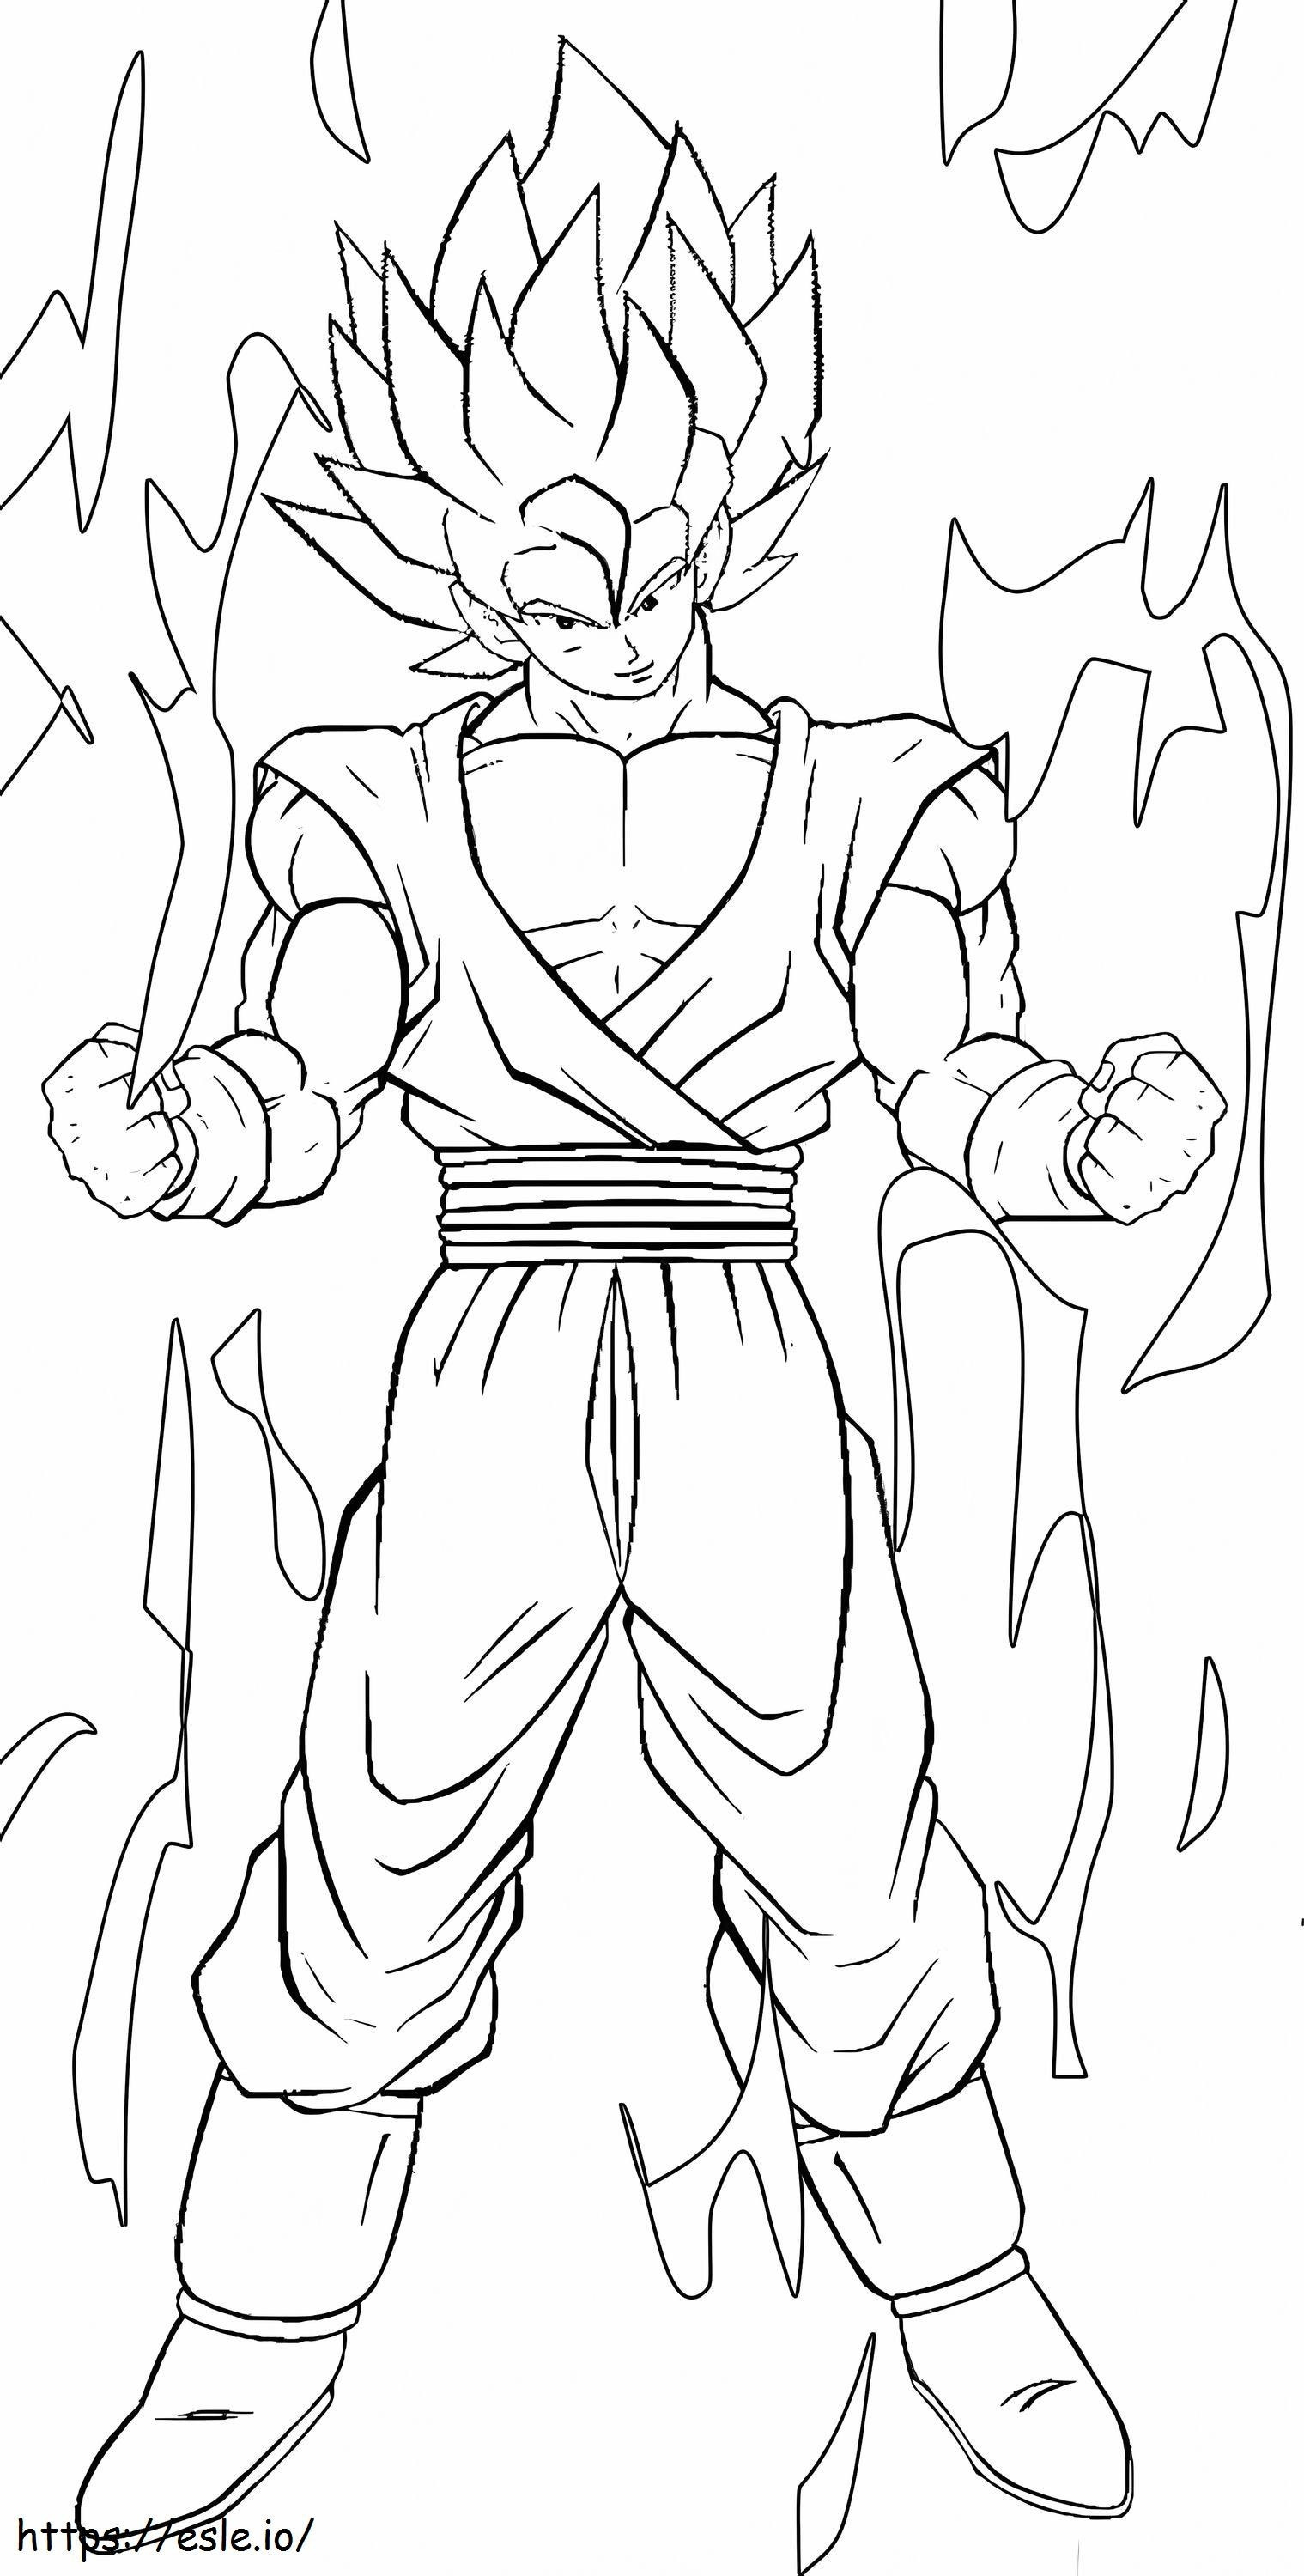 Rysunek Goku SSj1 kolorowanka